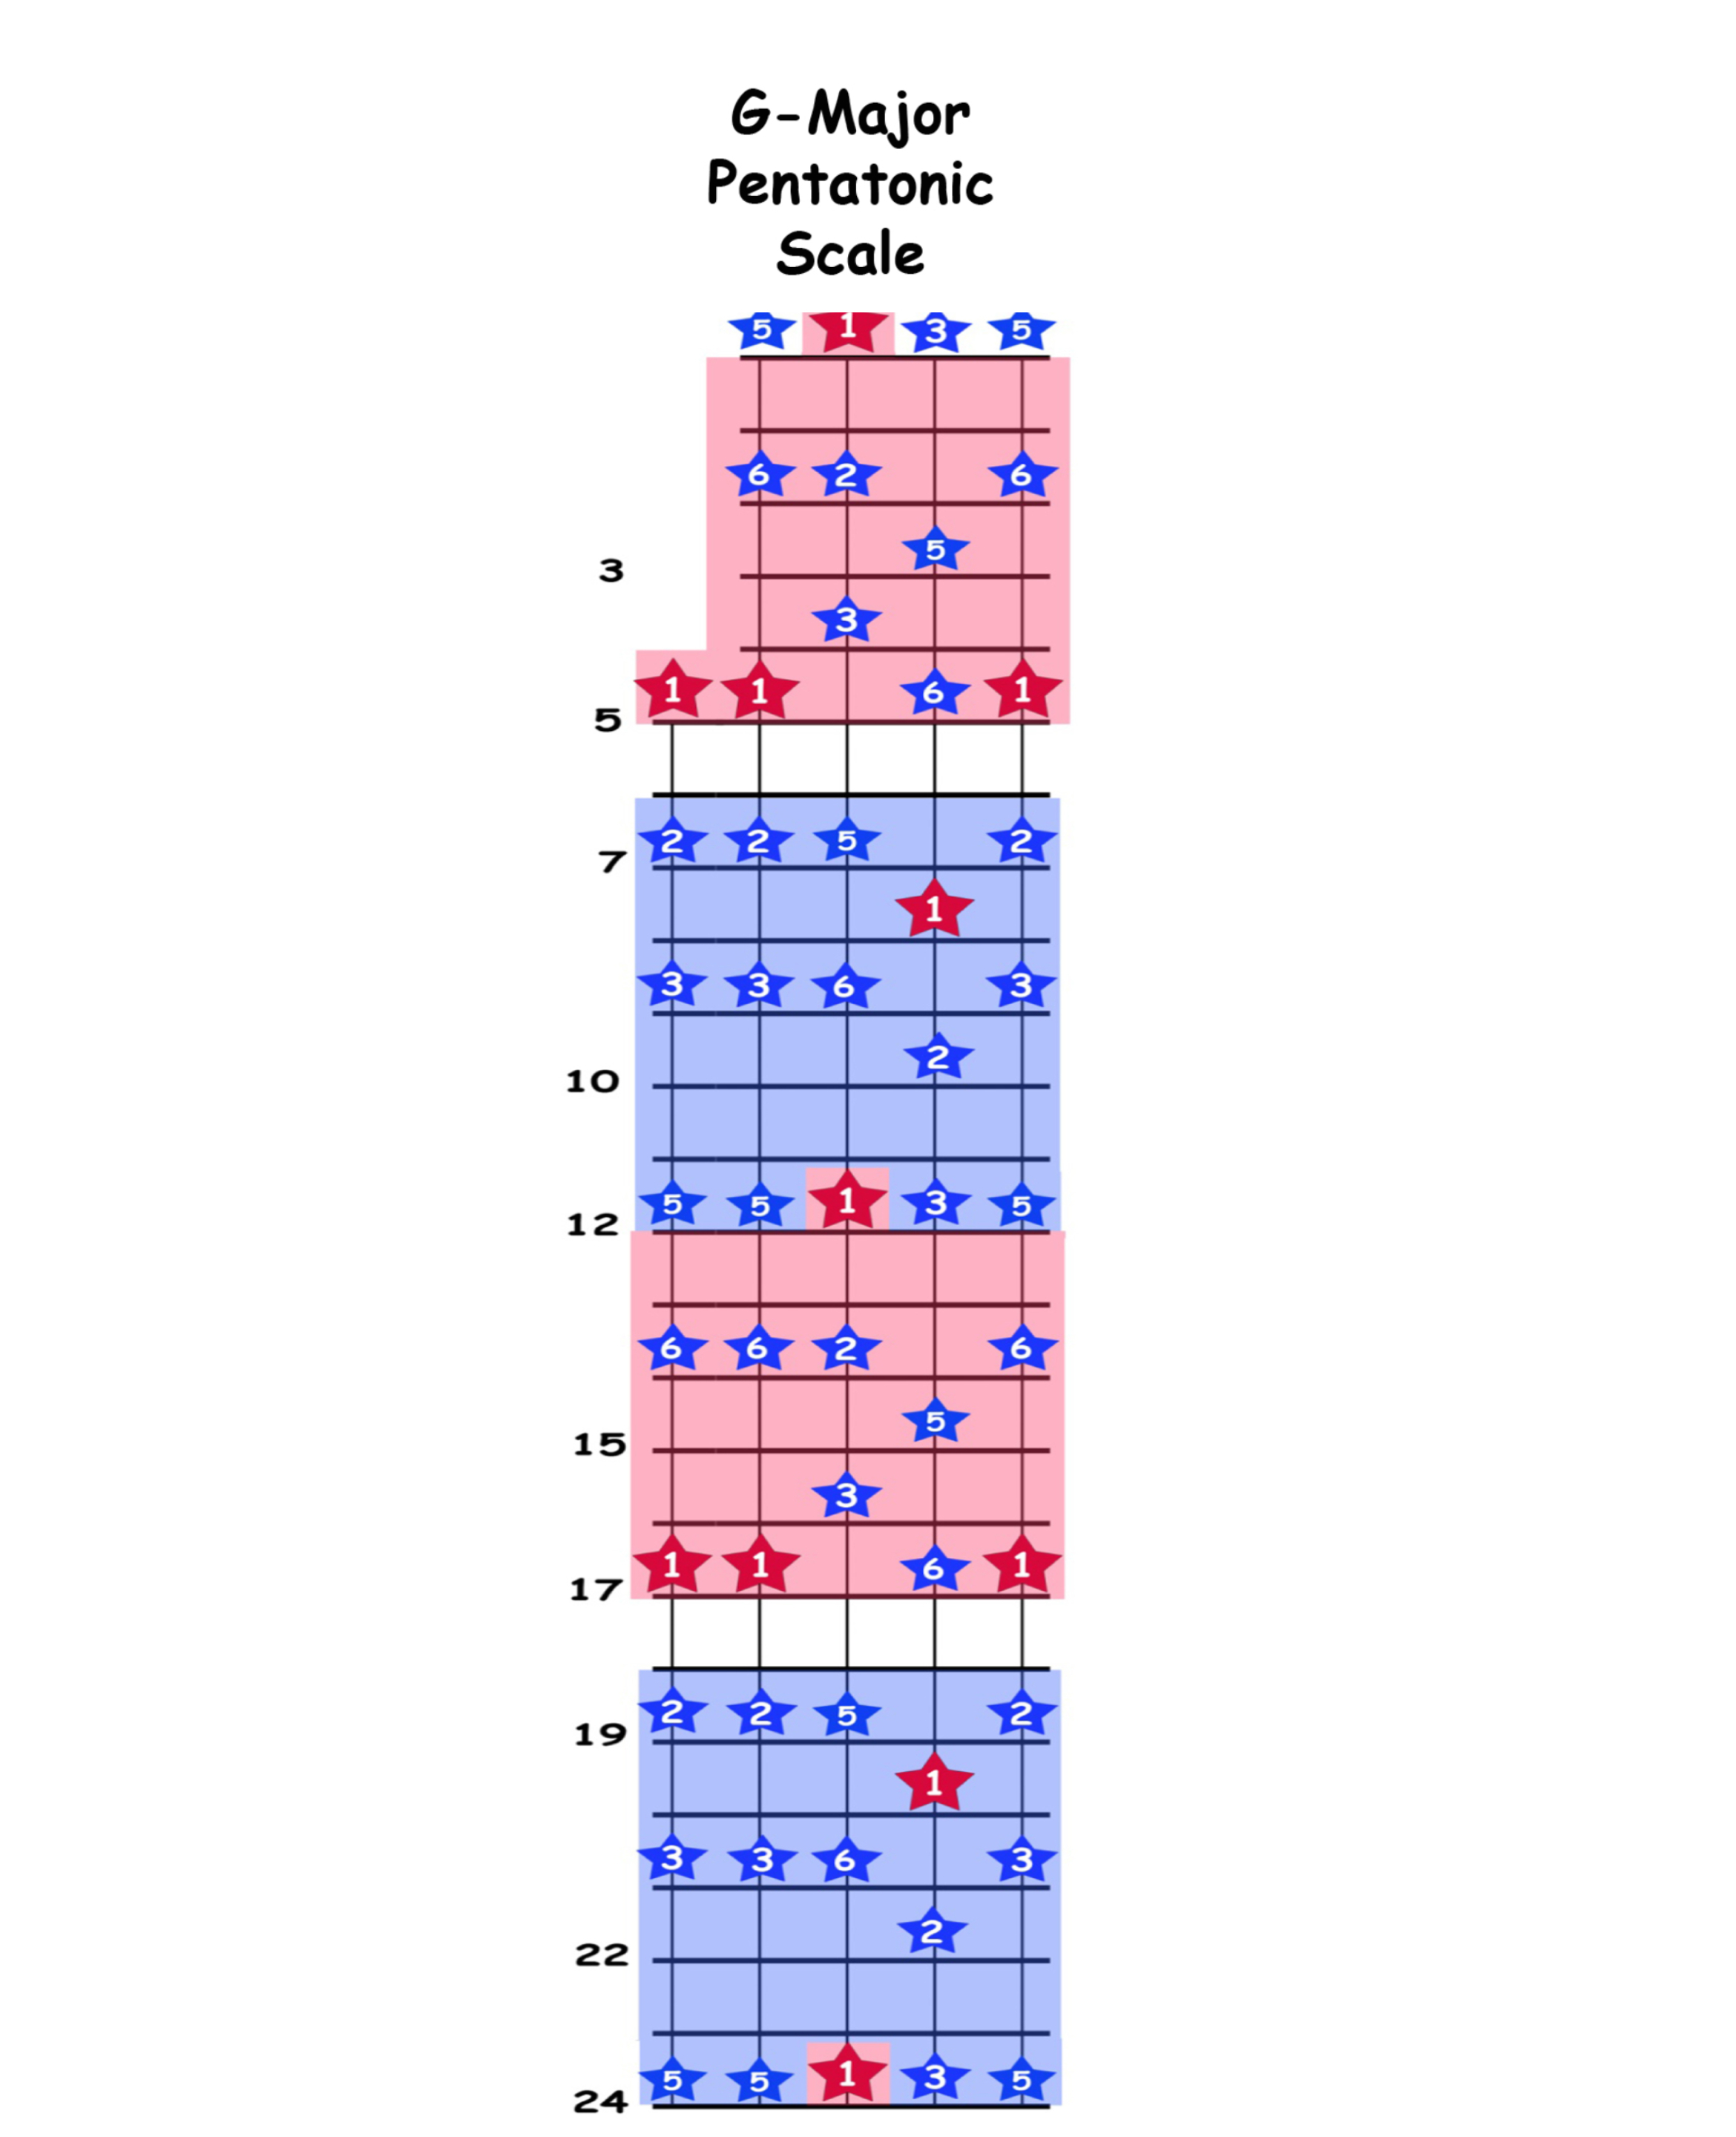 G-major pentatonic scale